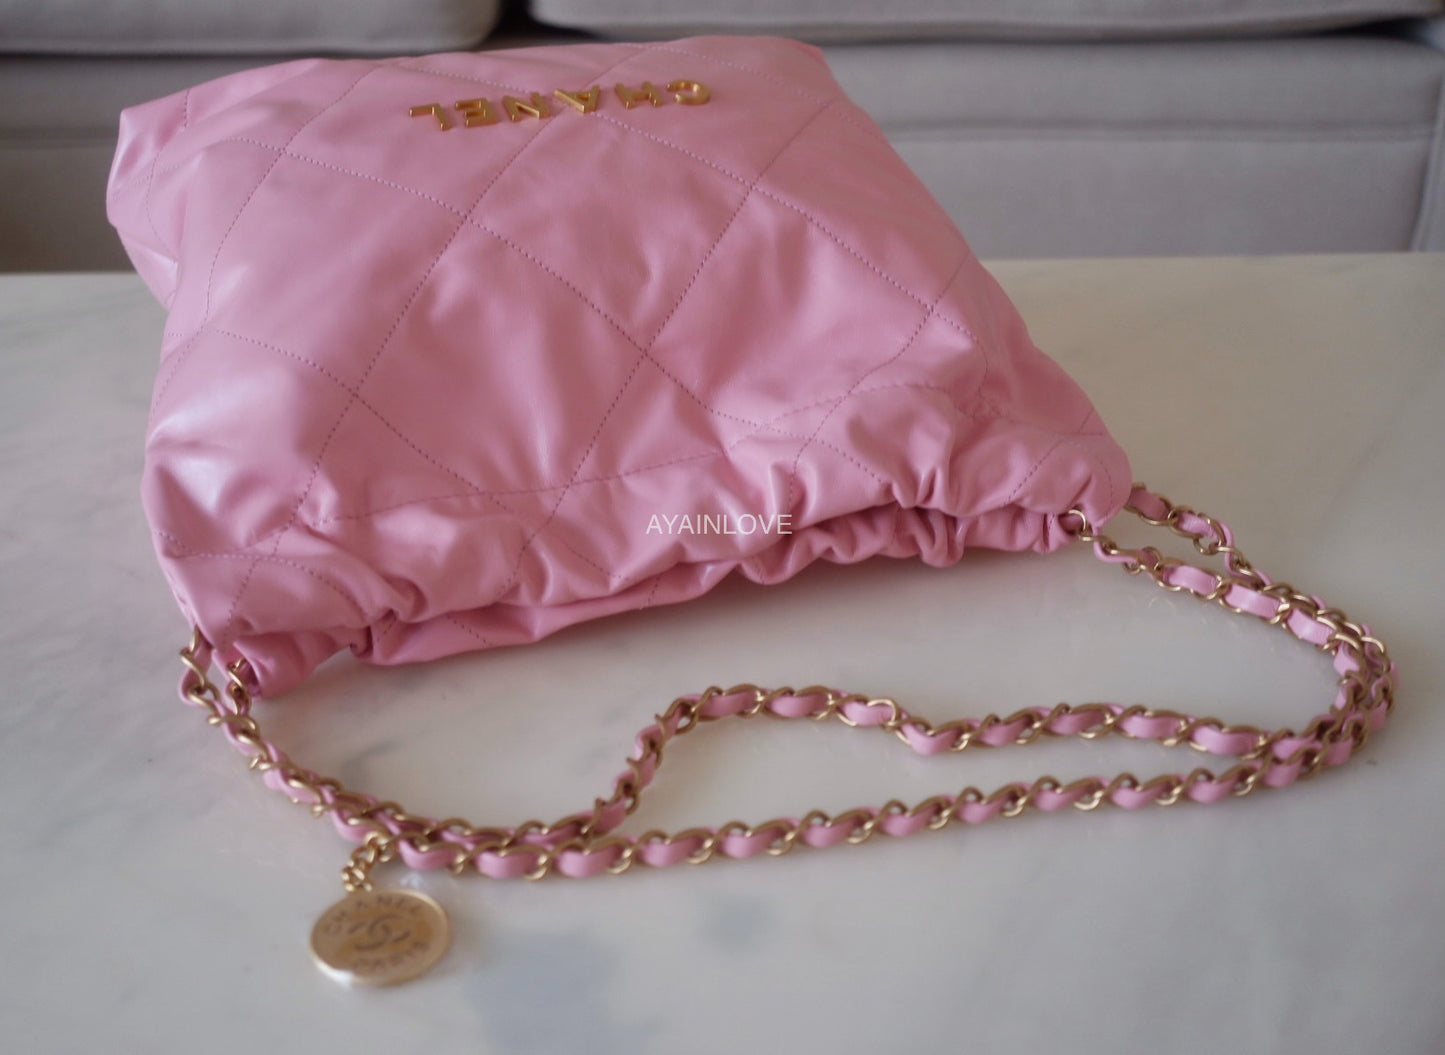 chanel pink bag